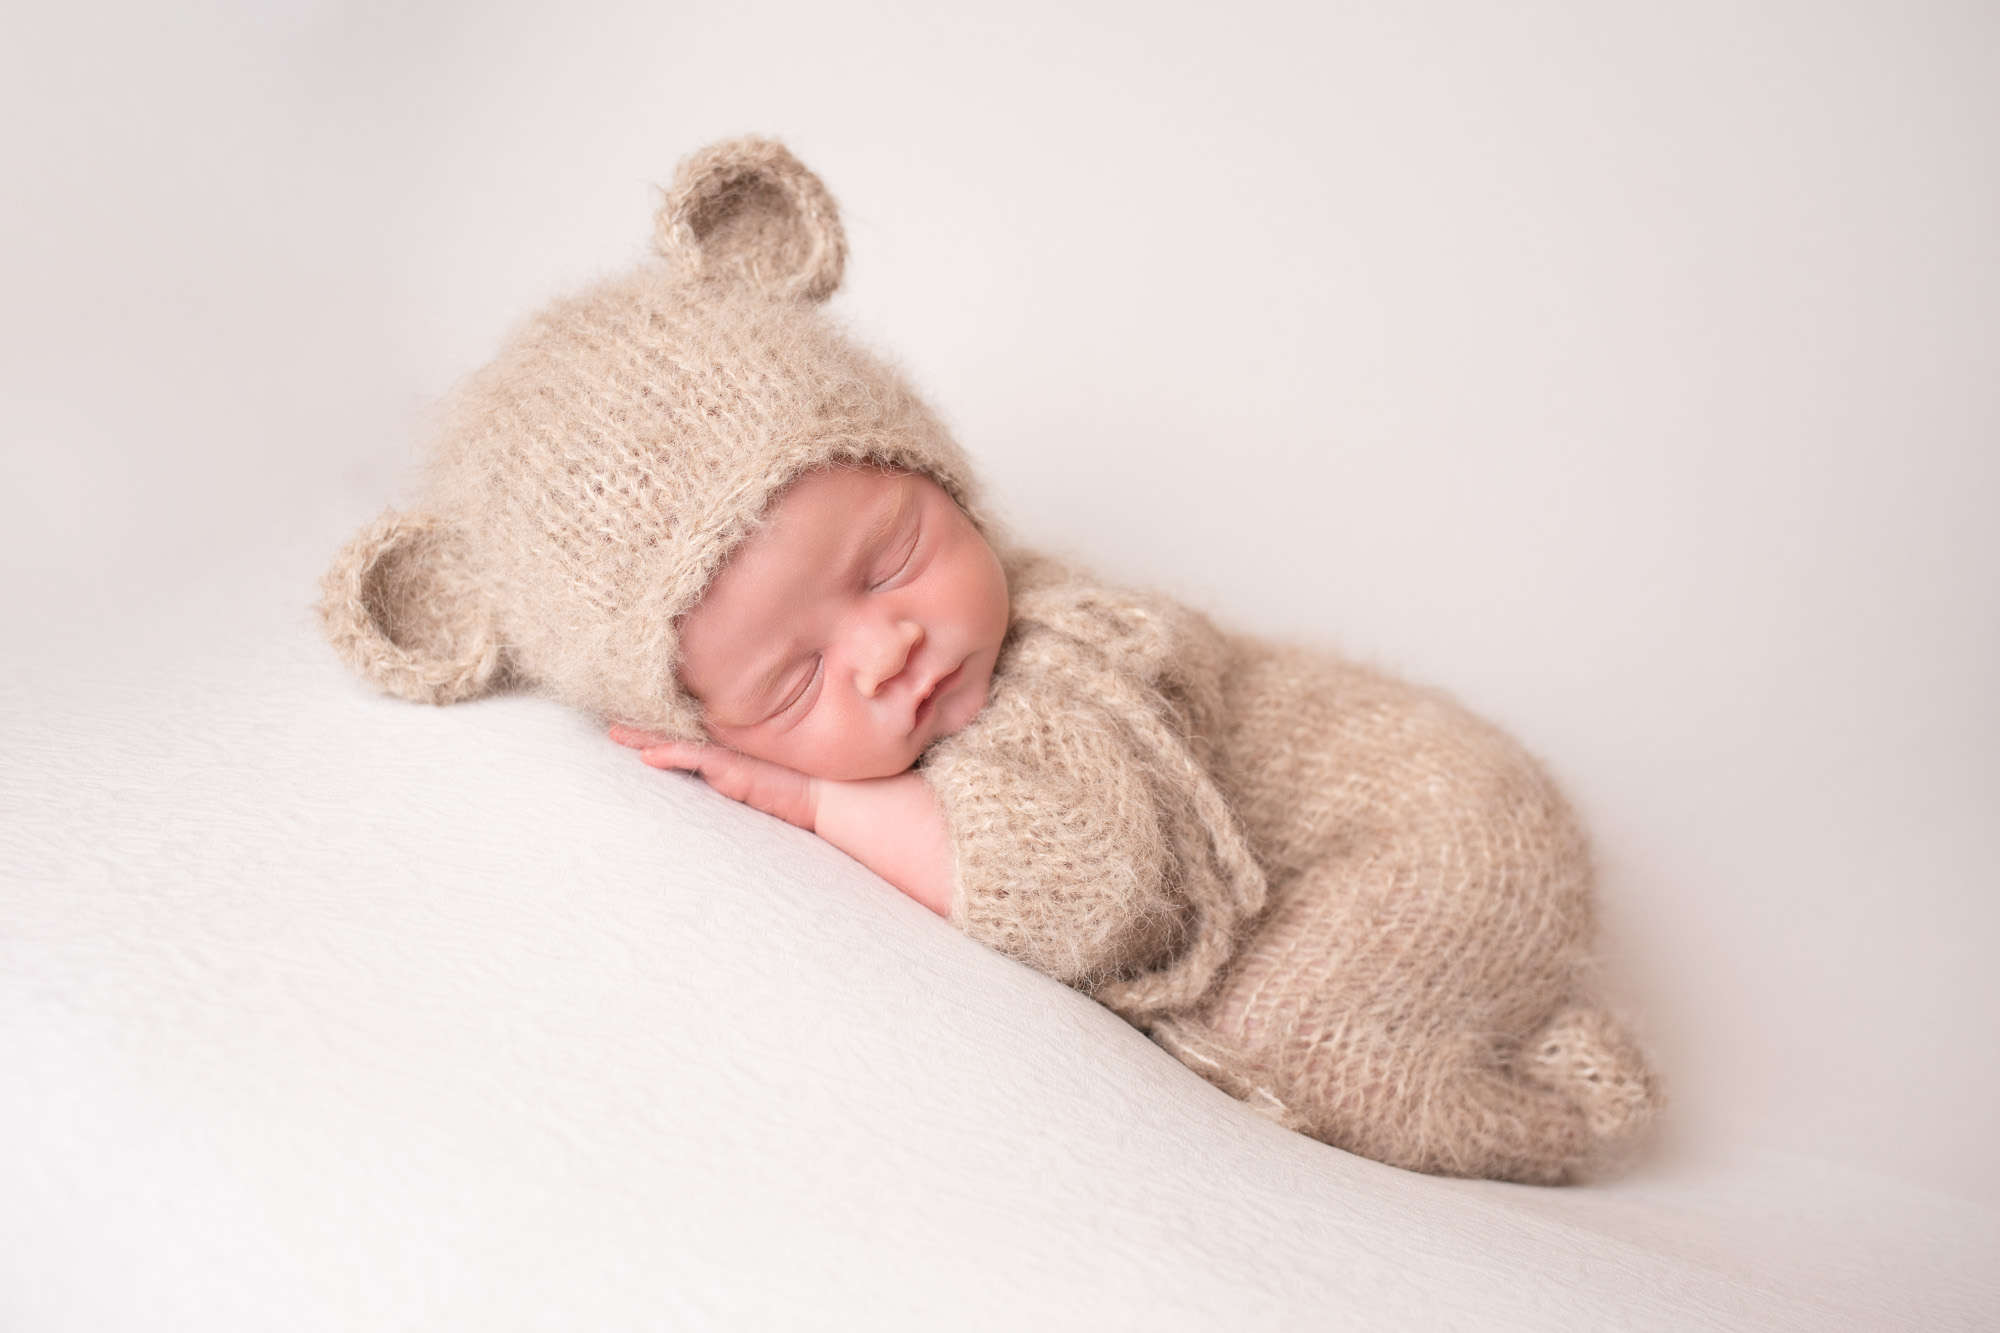 newborn photoshoot baby asleep dressed as teddy bear